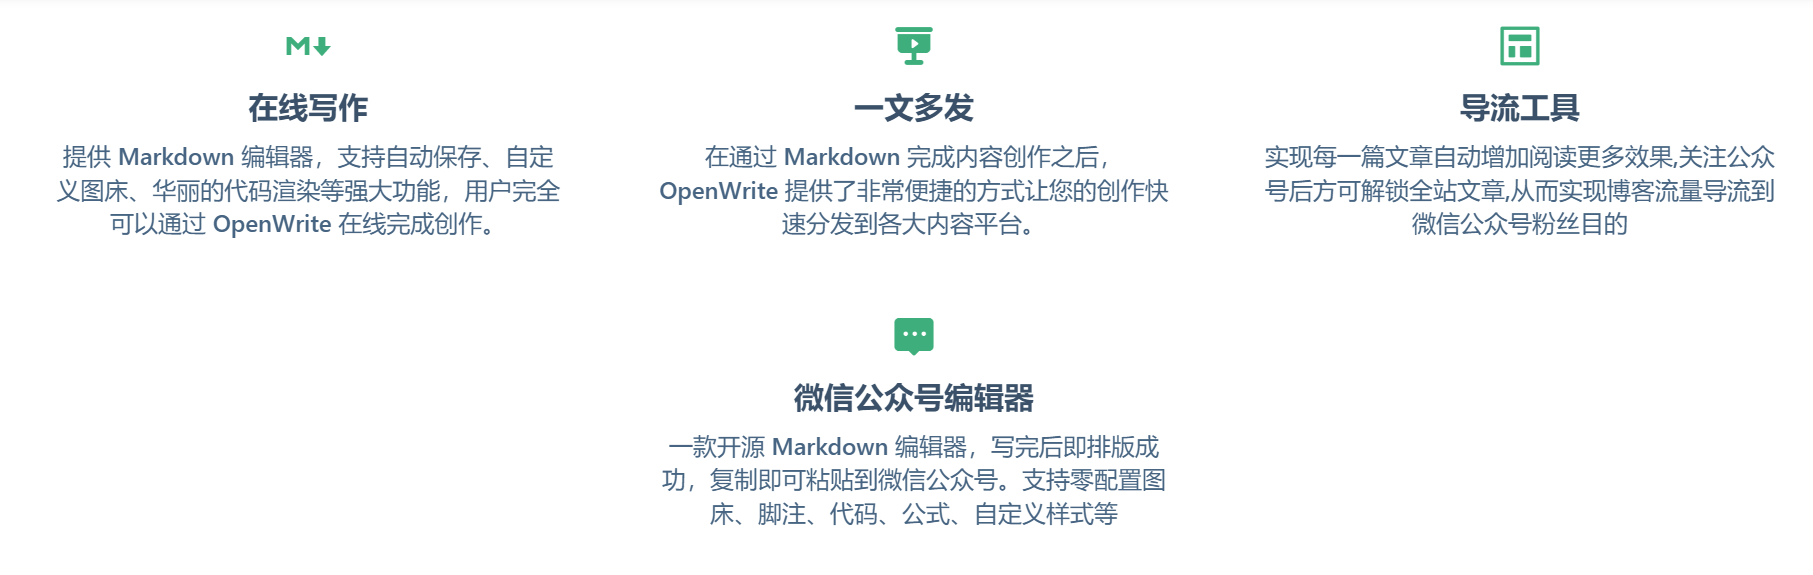 OpenWrite 一个自媒体运营管理工具-青争开放社区